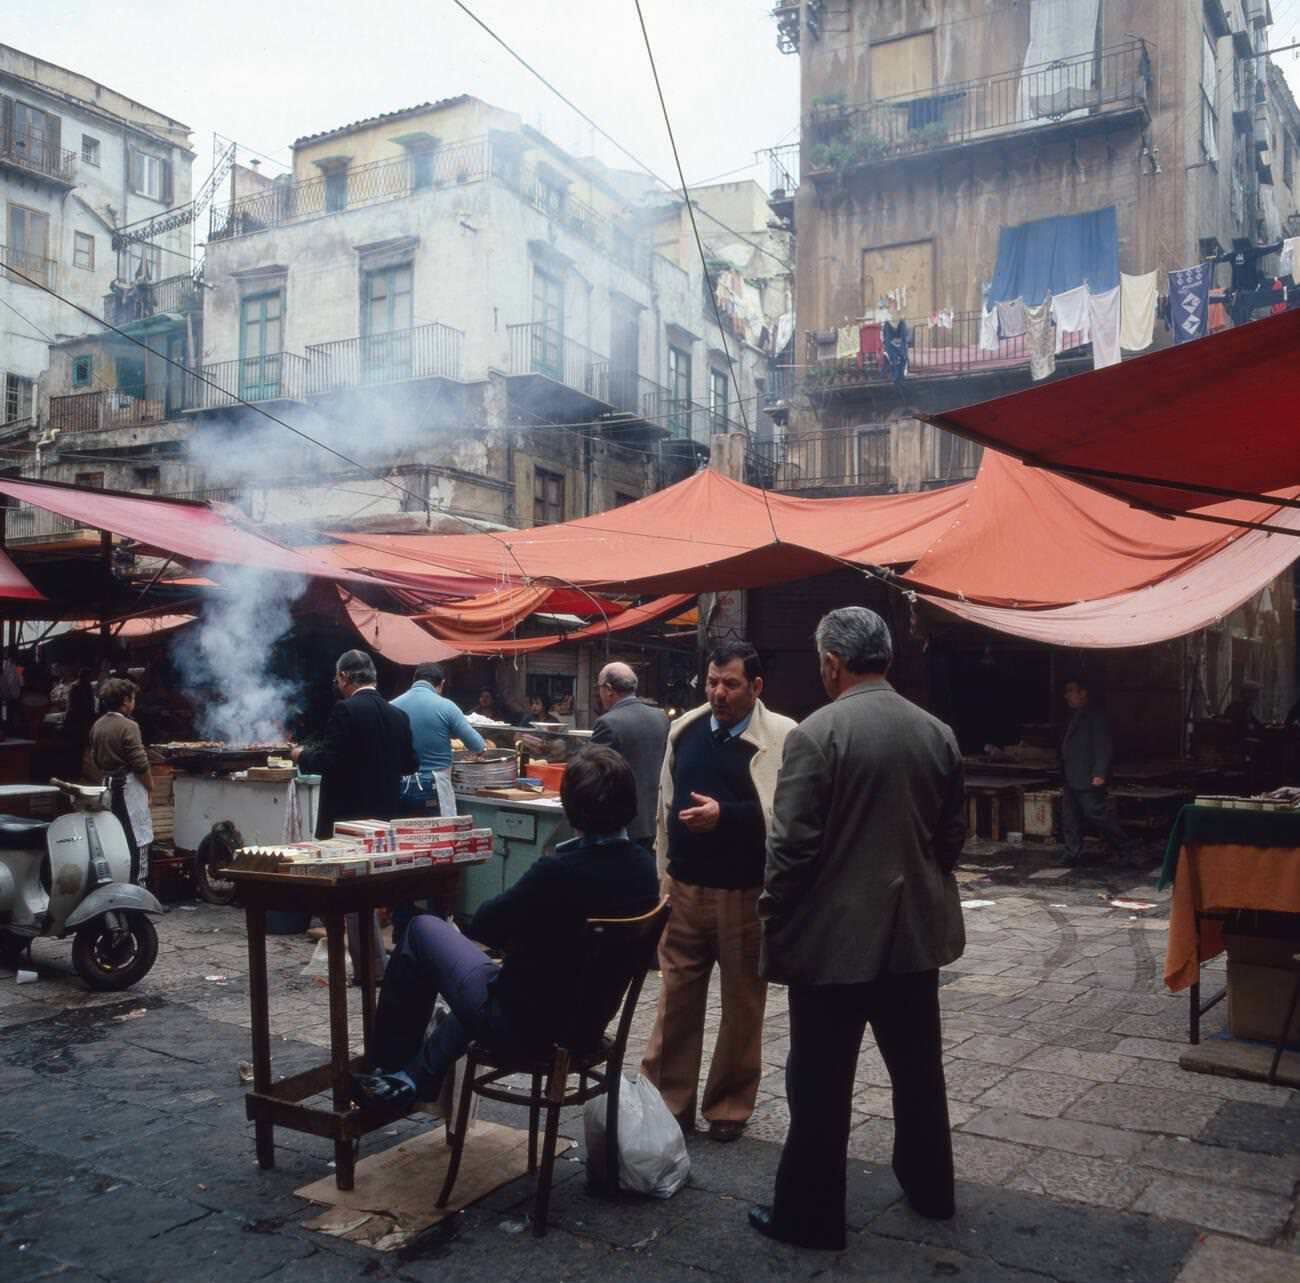 Market day in Palermo, Sicily, in the 1970s.